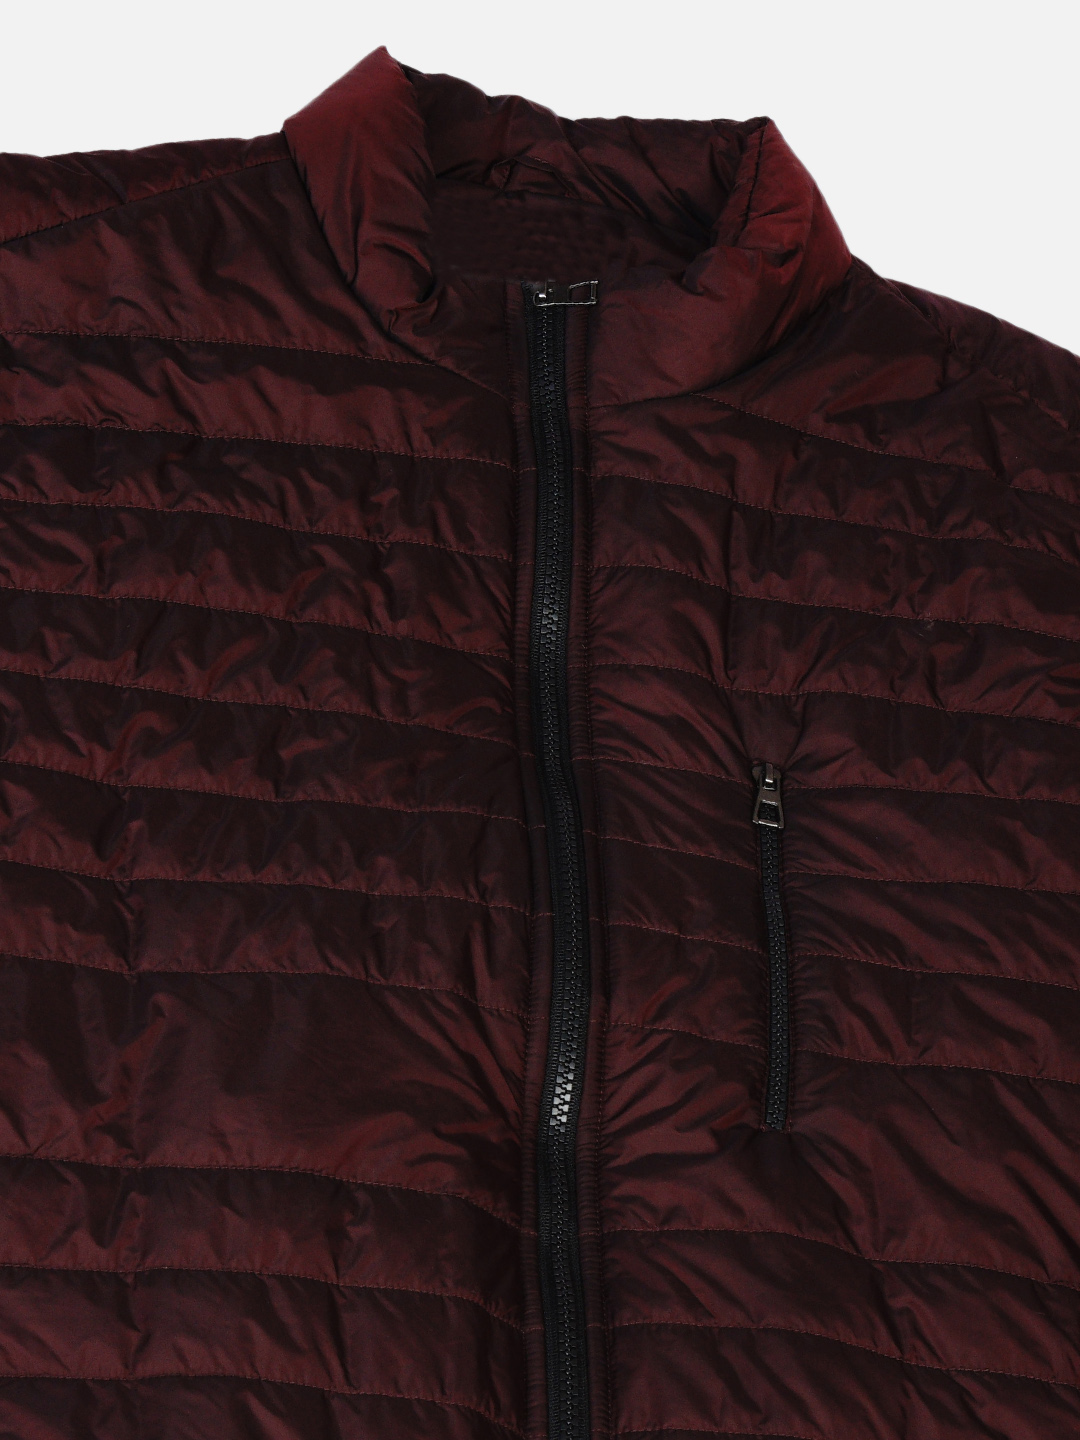 winterwear/jackets/JPJKT73010B/jpjkt73010b-2.jpg